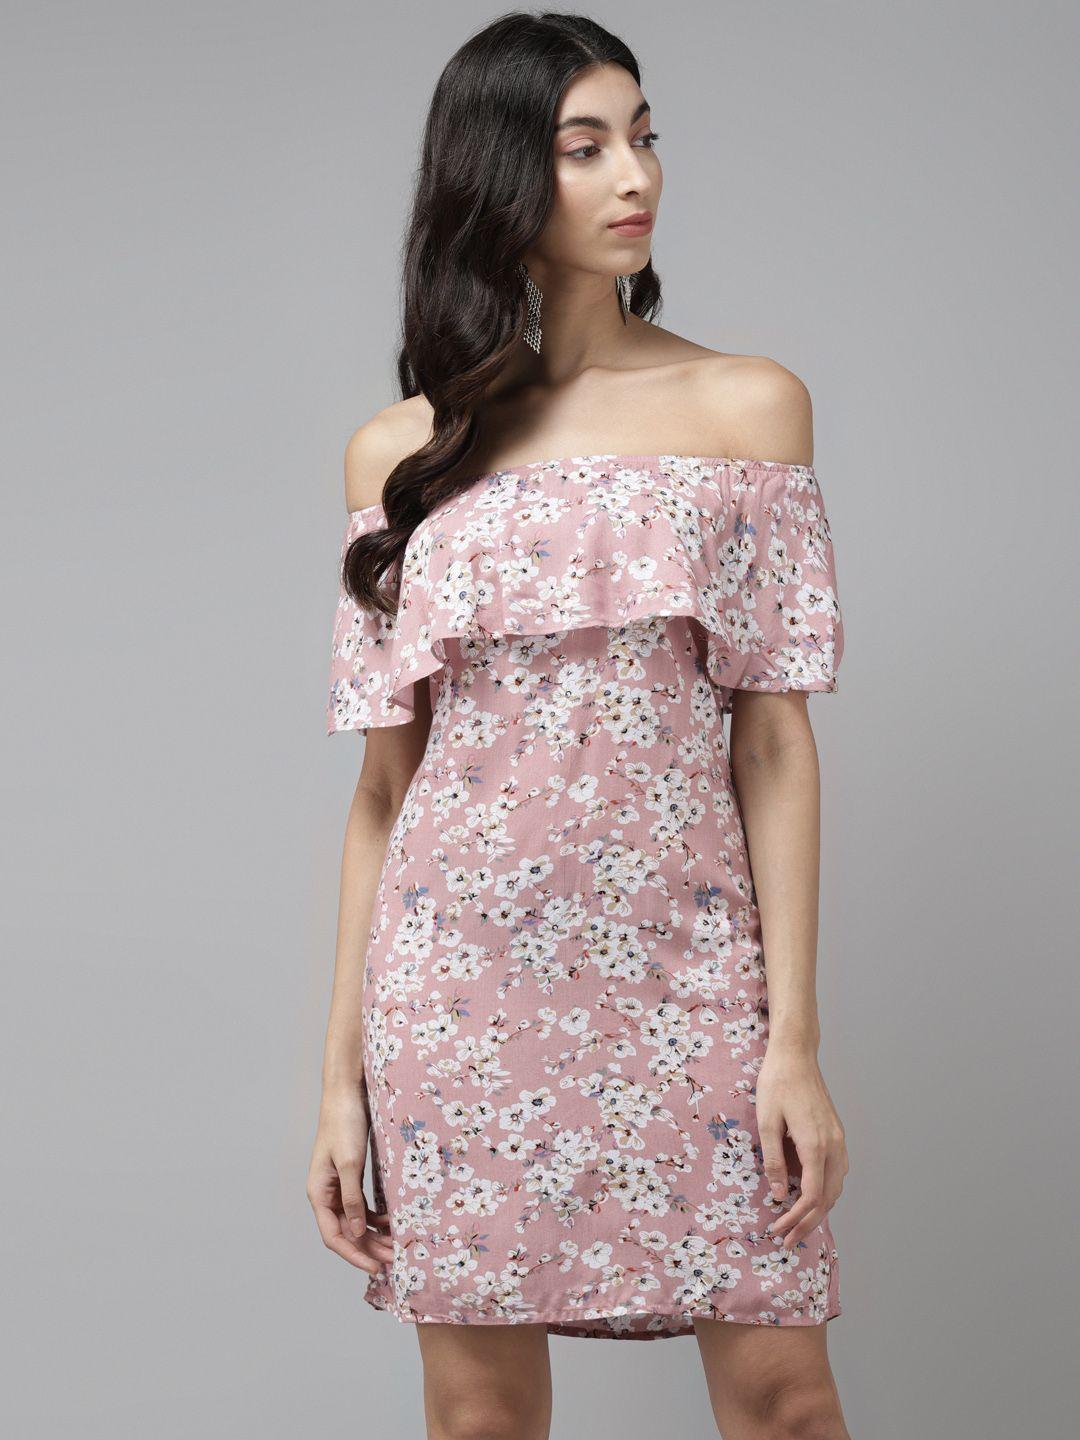 cayman women pink & white floral printed off shoulder sheath dress